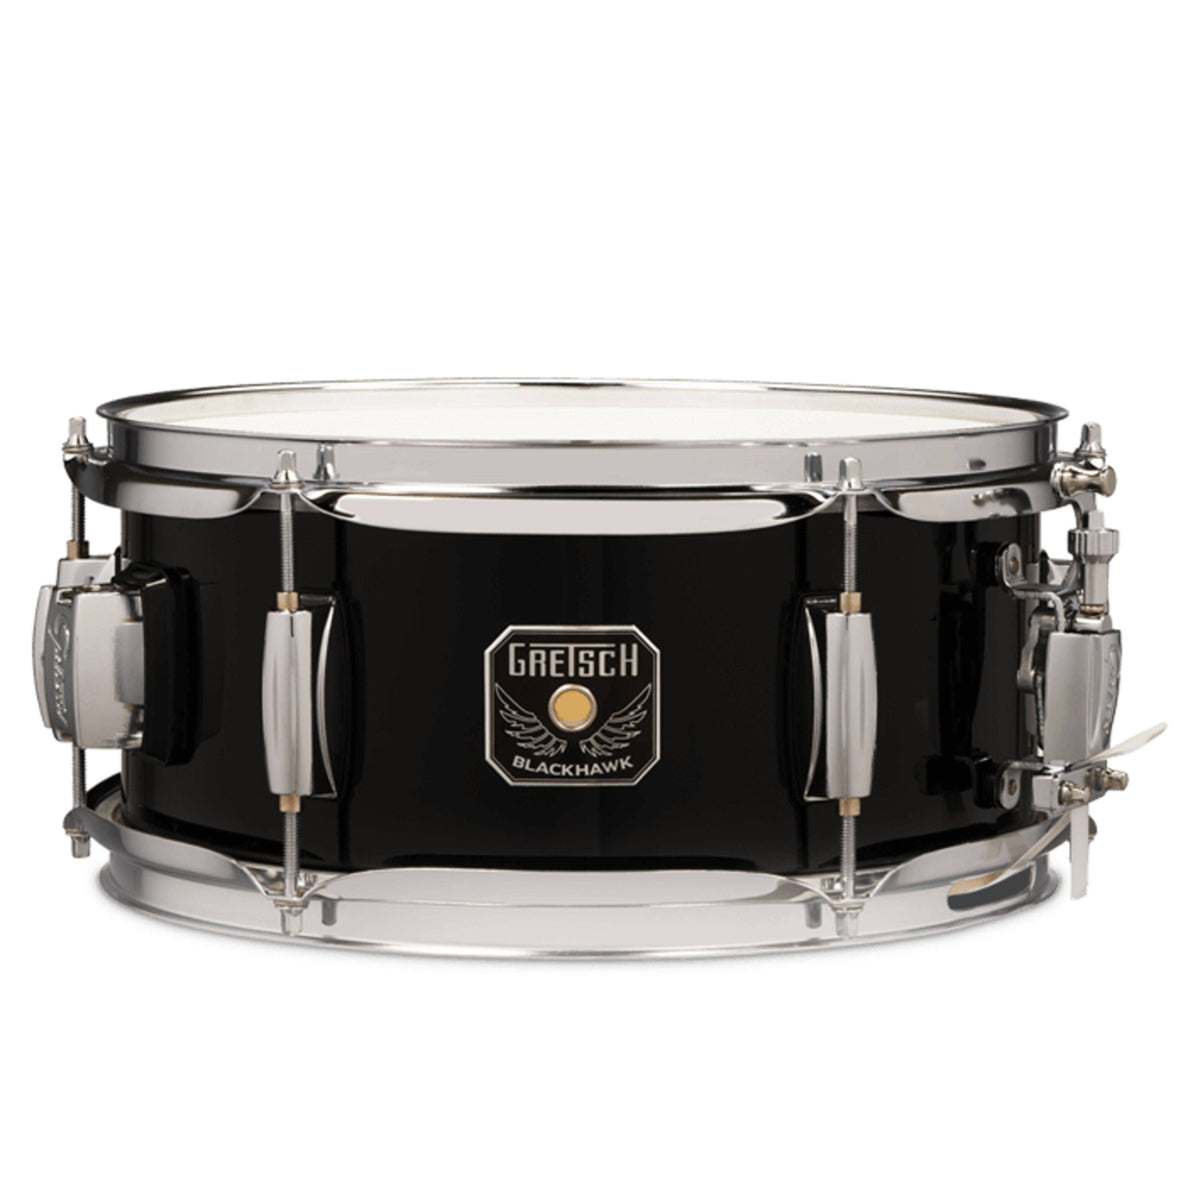 Gretsch "Full Range" 12"x5.5" Black Hawk Mighty Mini Snare Drum